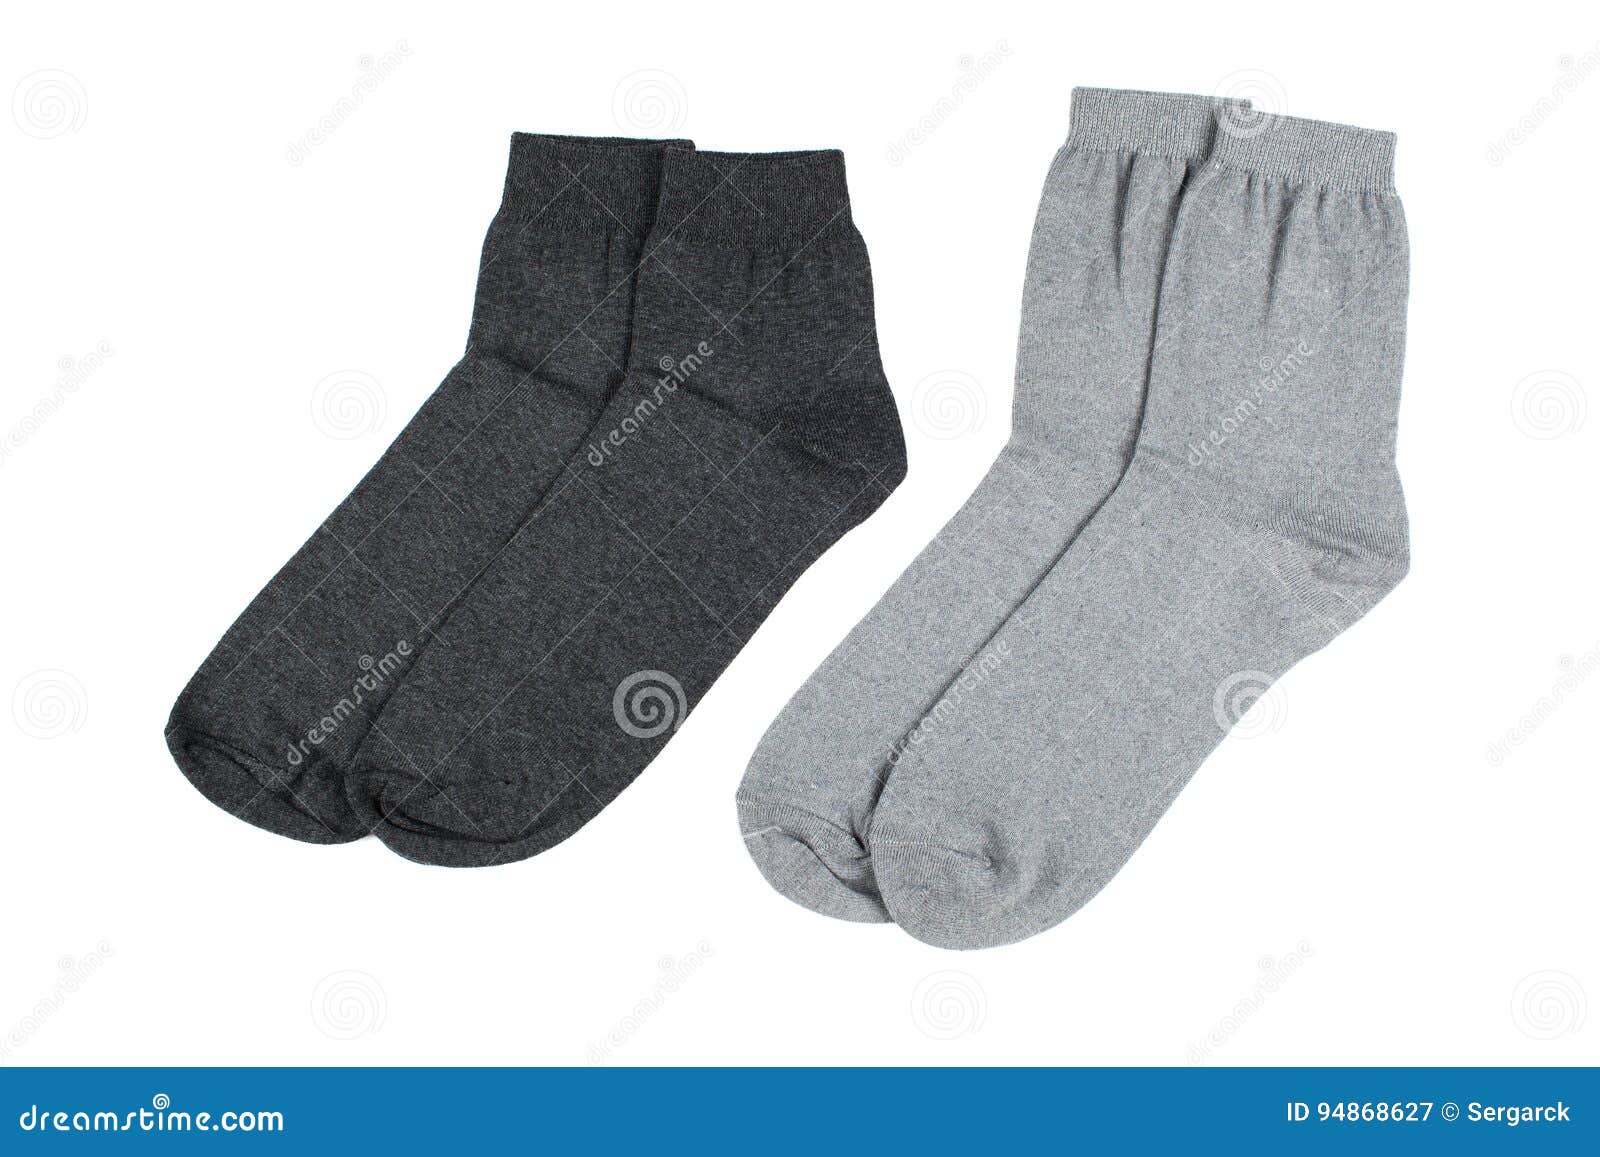 Socks Made of Cotton Isolated on White Background. Stock Image - Image ...